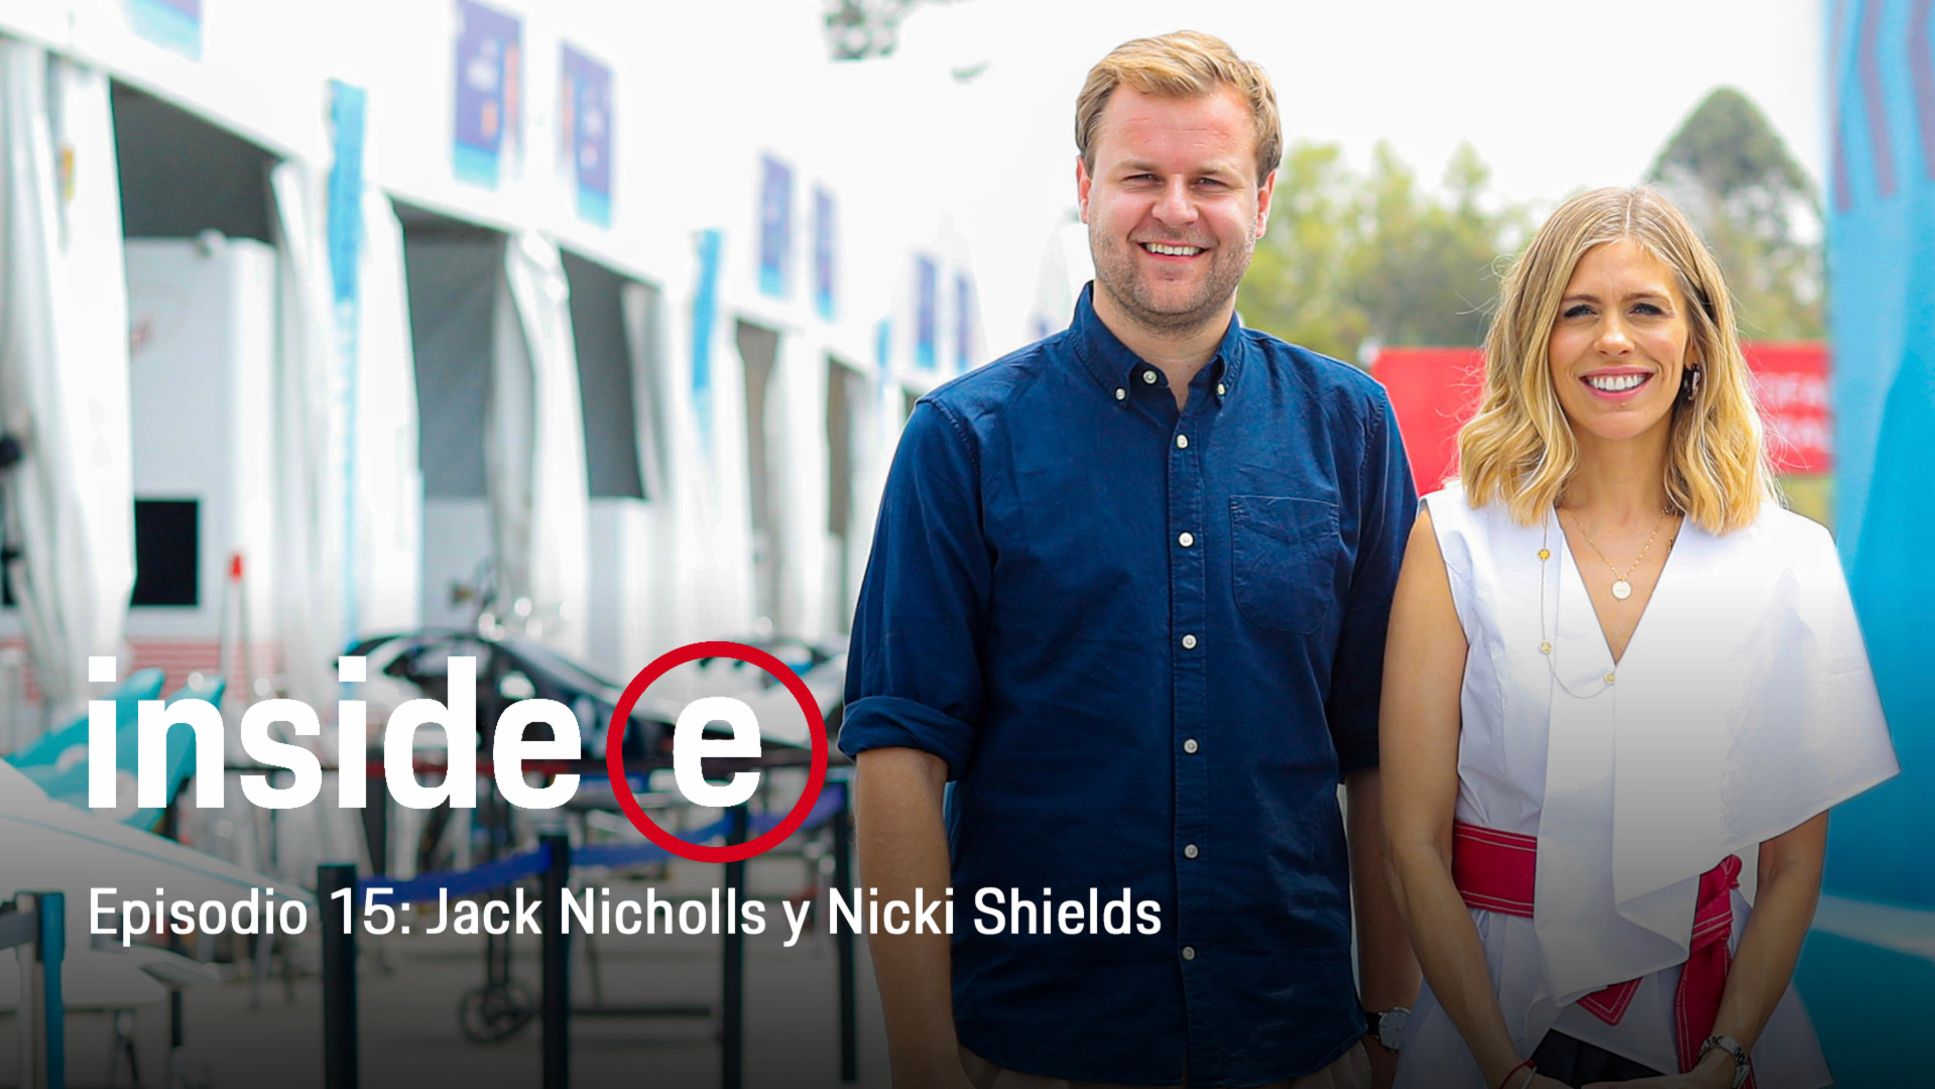 Podcast “Inside E”, episodio 15 con Jack Nicholls y Nicki Shields, 2020, Porsche AG